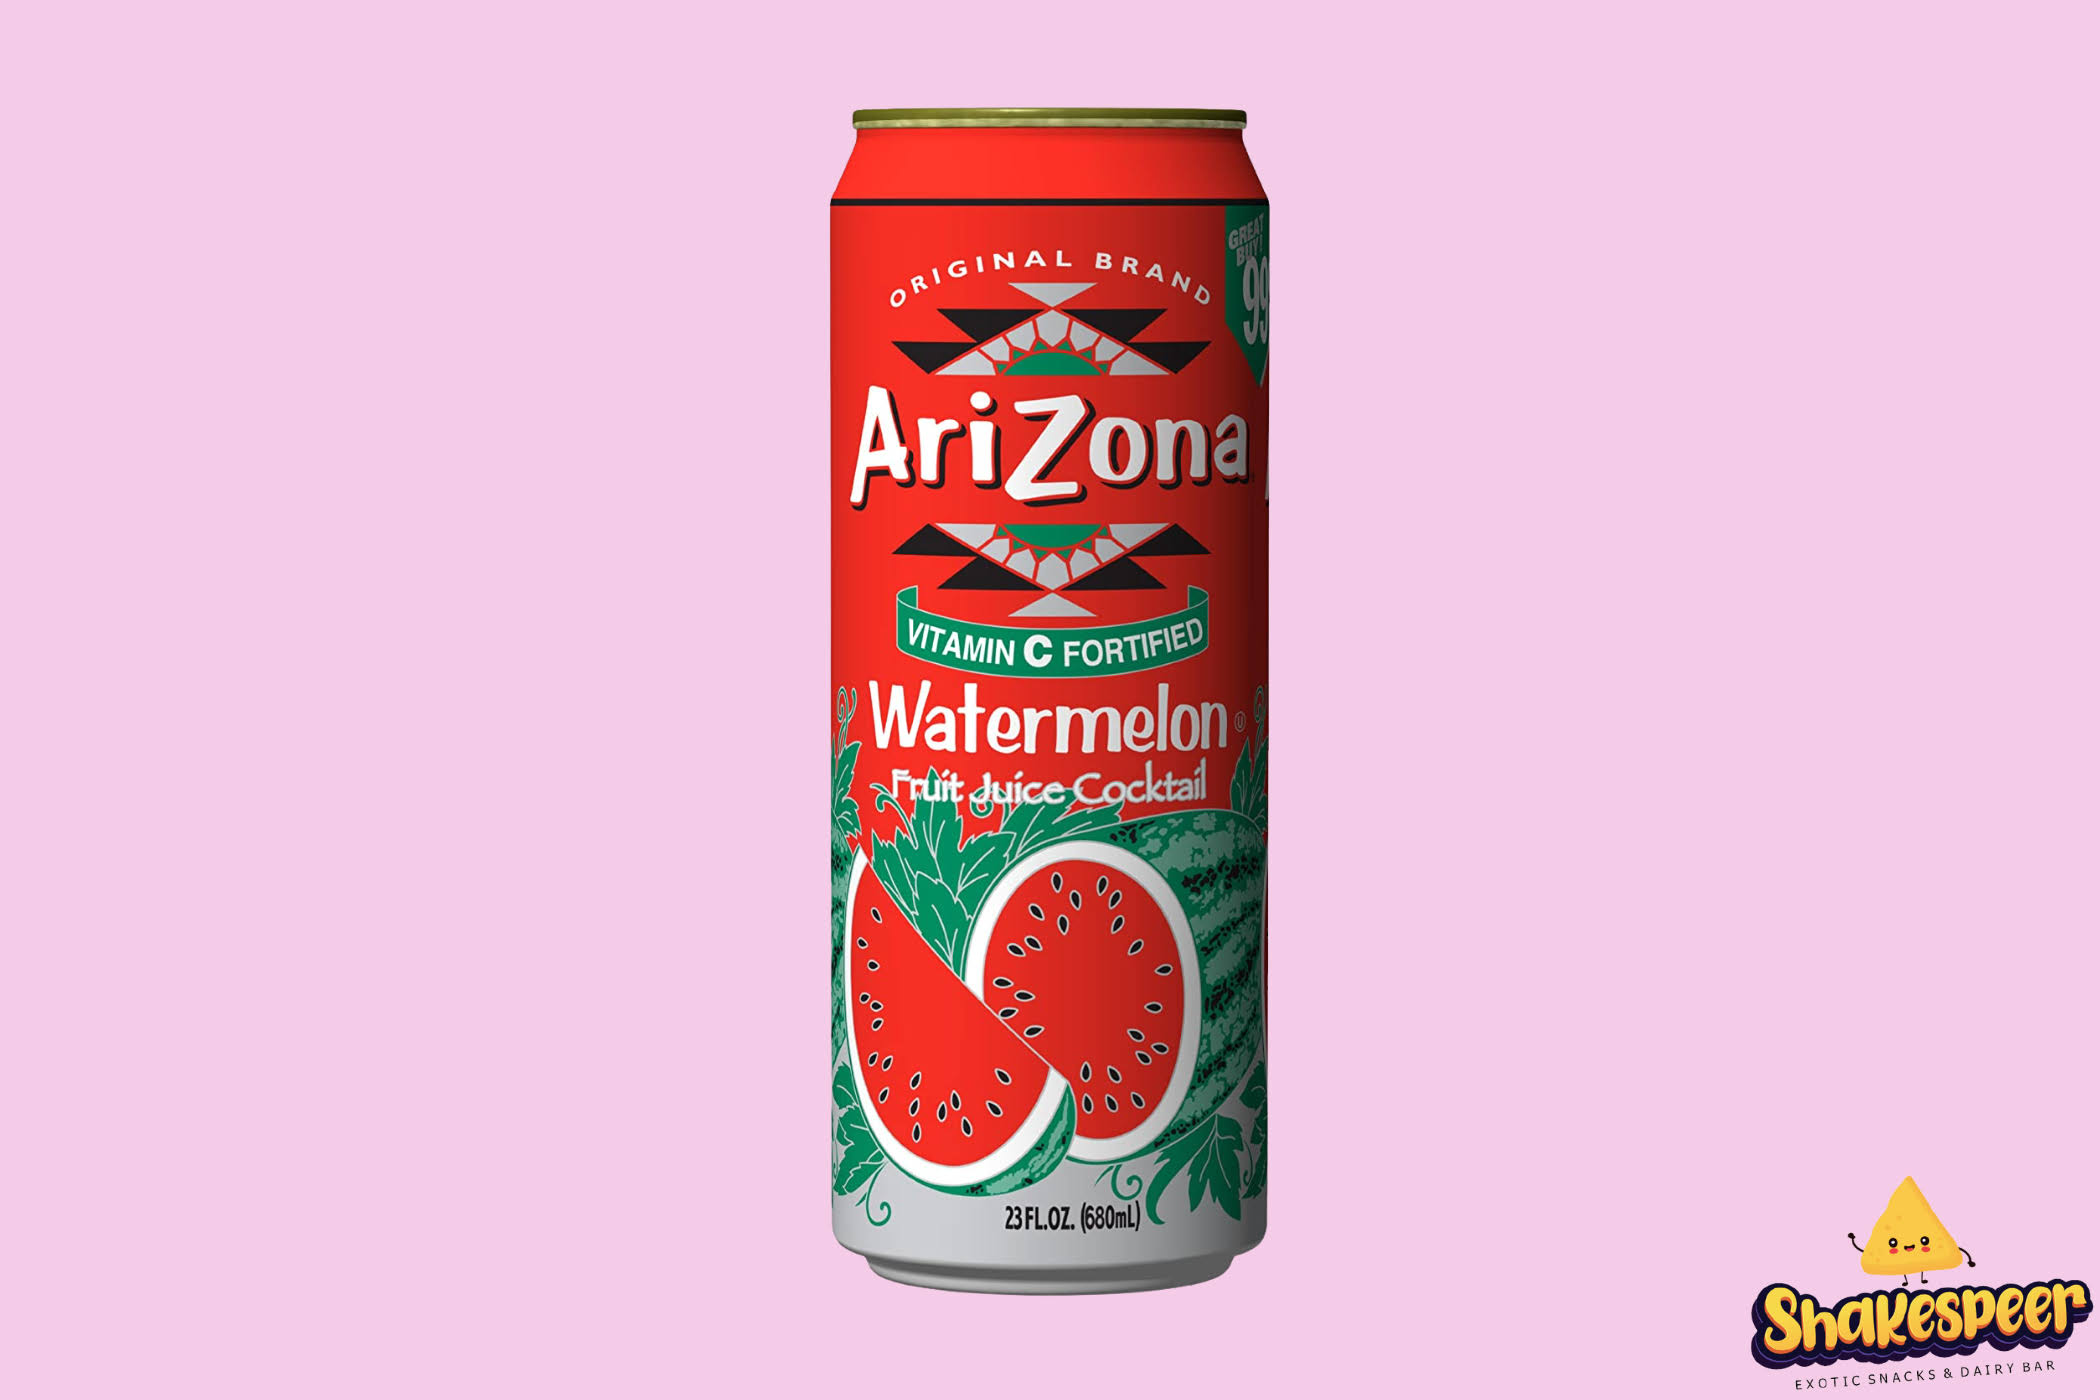 Arizona Watermelon Fruit Juice Cocktail - 23oz